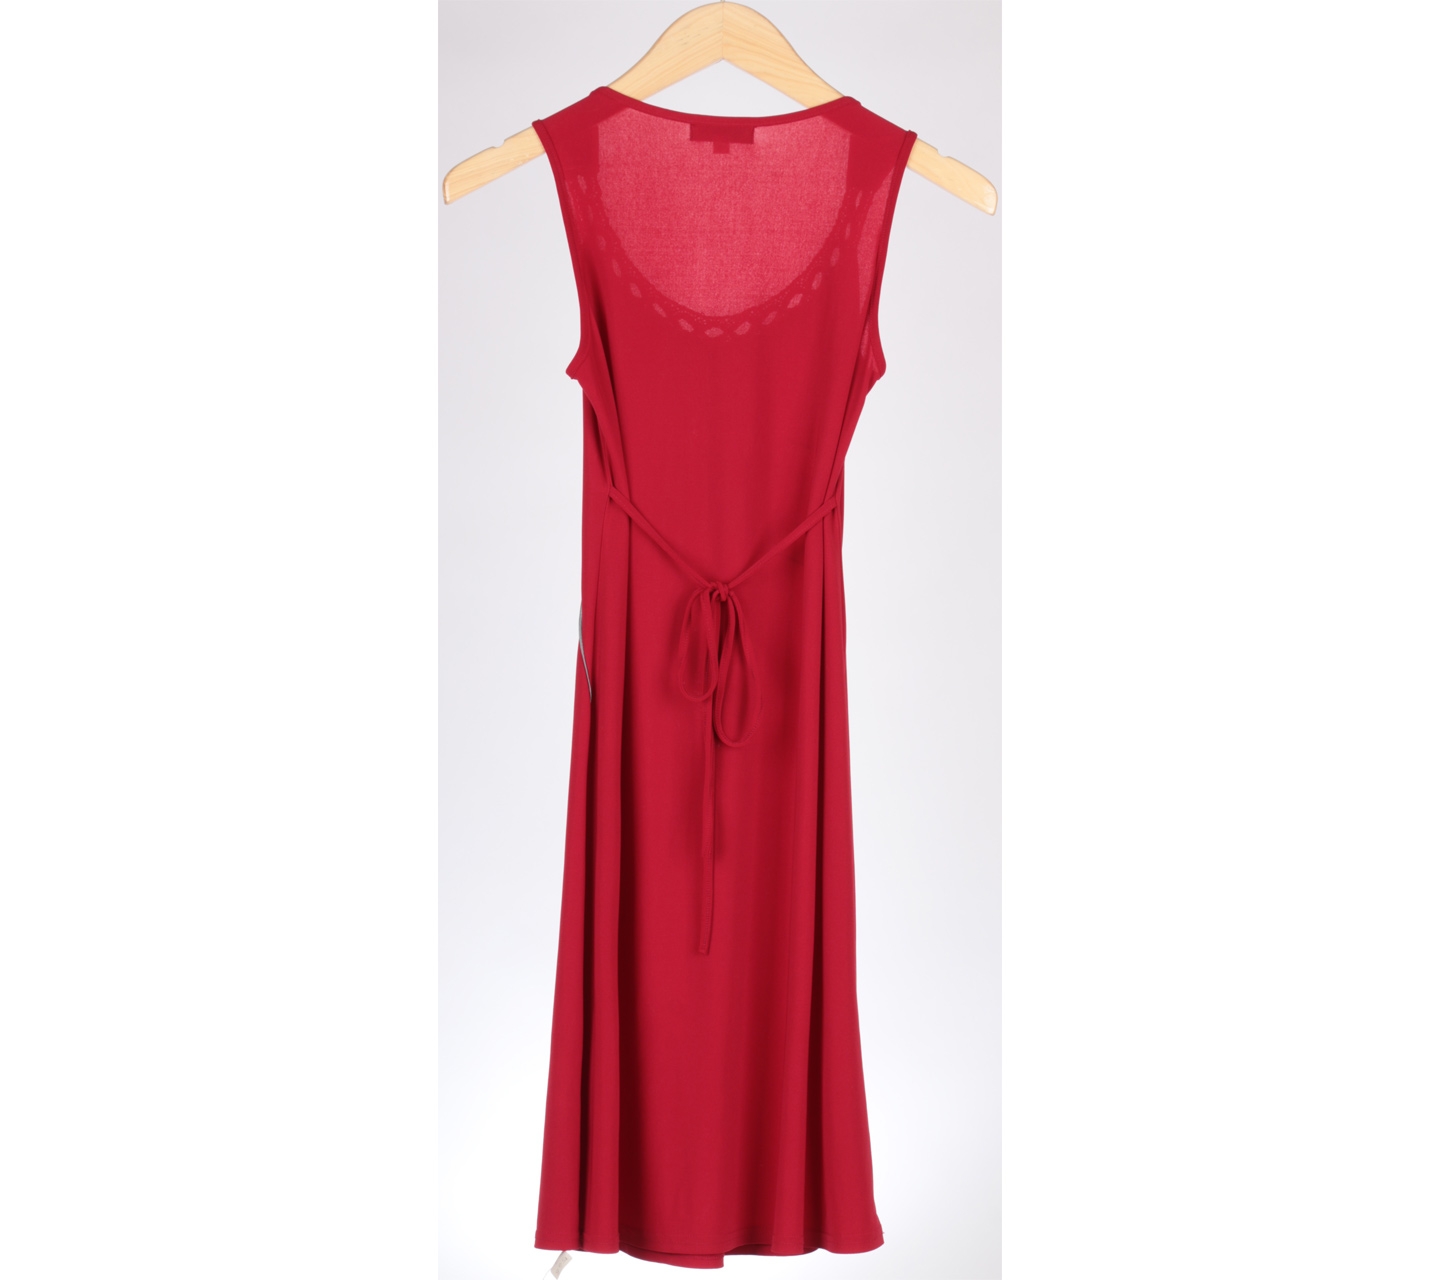 Arithalia Red Sequined Collar Sleeveless Mini Dress